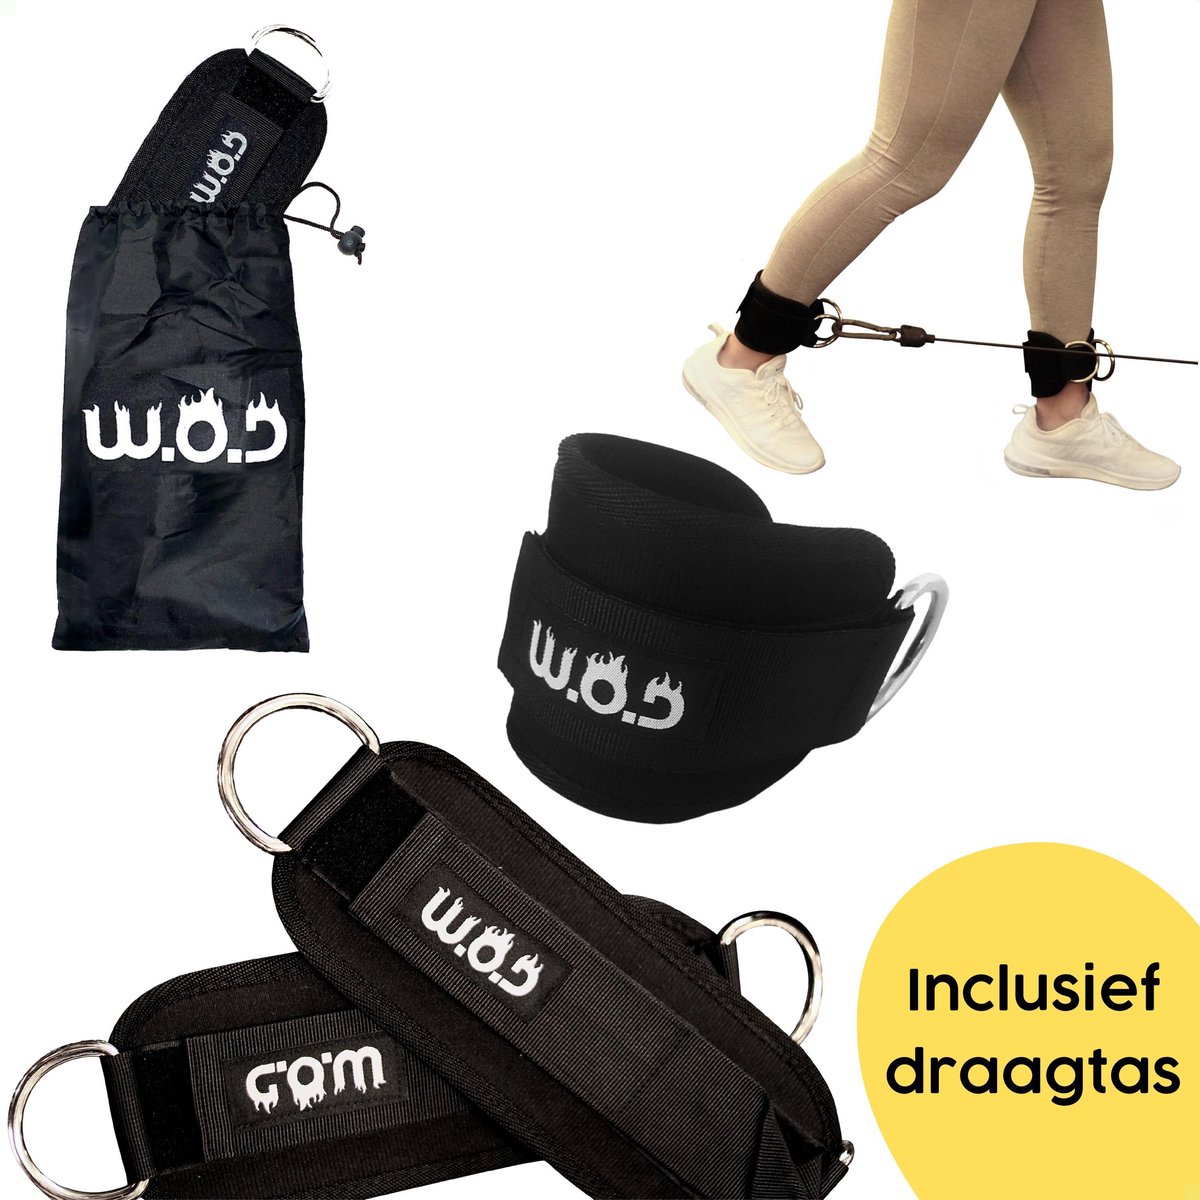 W.O.D Ankle Strap - Enkelband Fitness - Zwart - 1 Stuk (Met Draagtas)